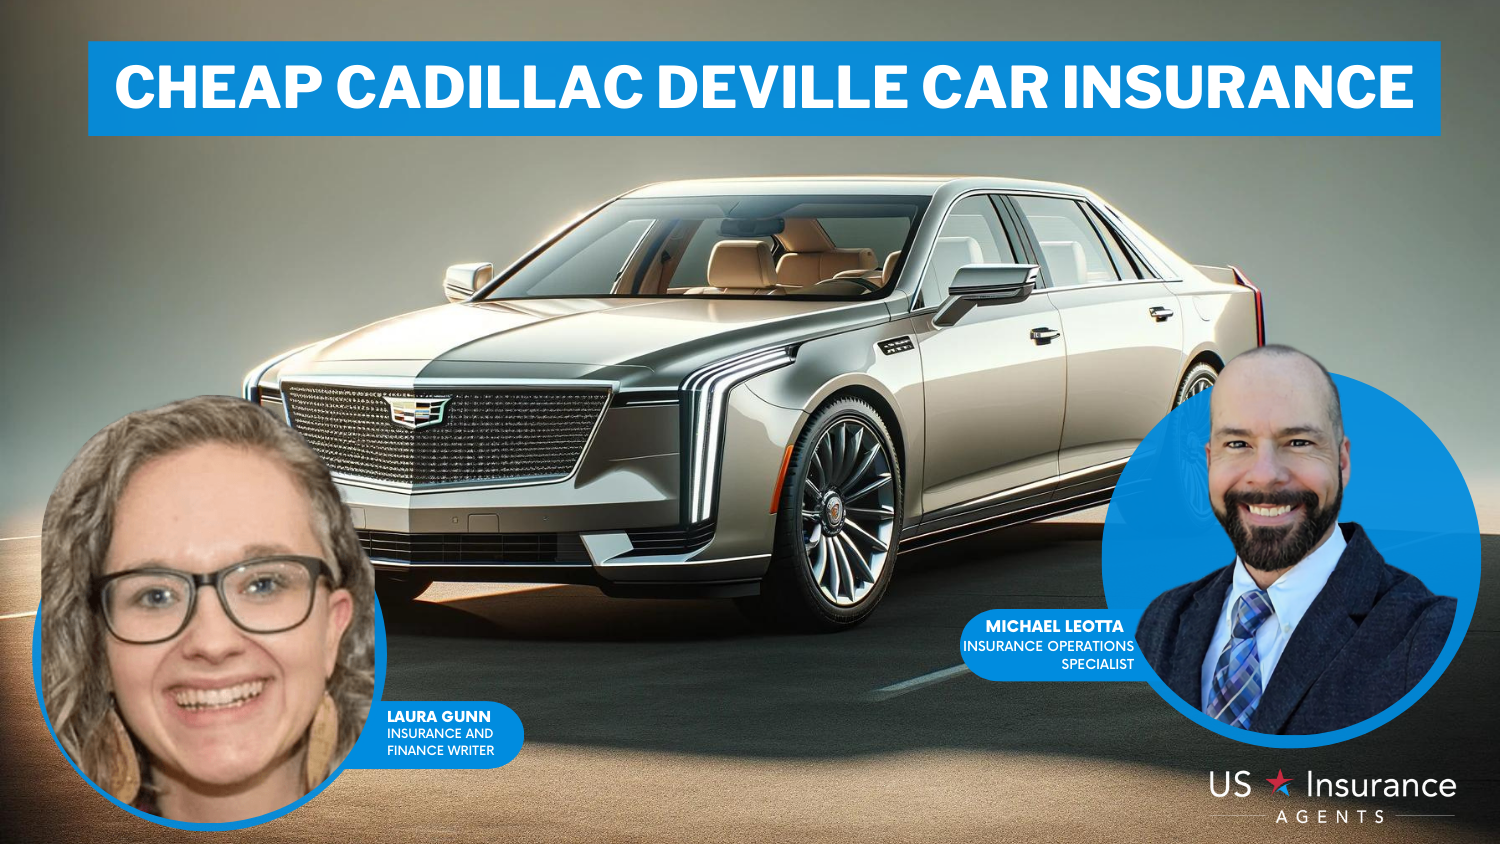 Cheap Cadillac DeVille Car Insurance: Erie, Auto-owners, Progressive